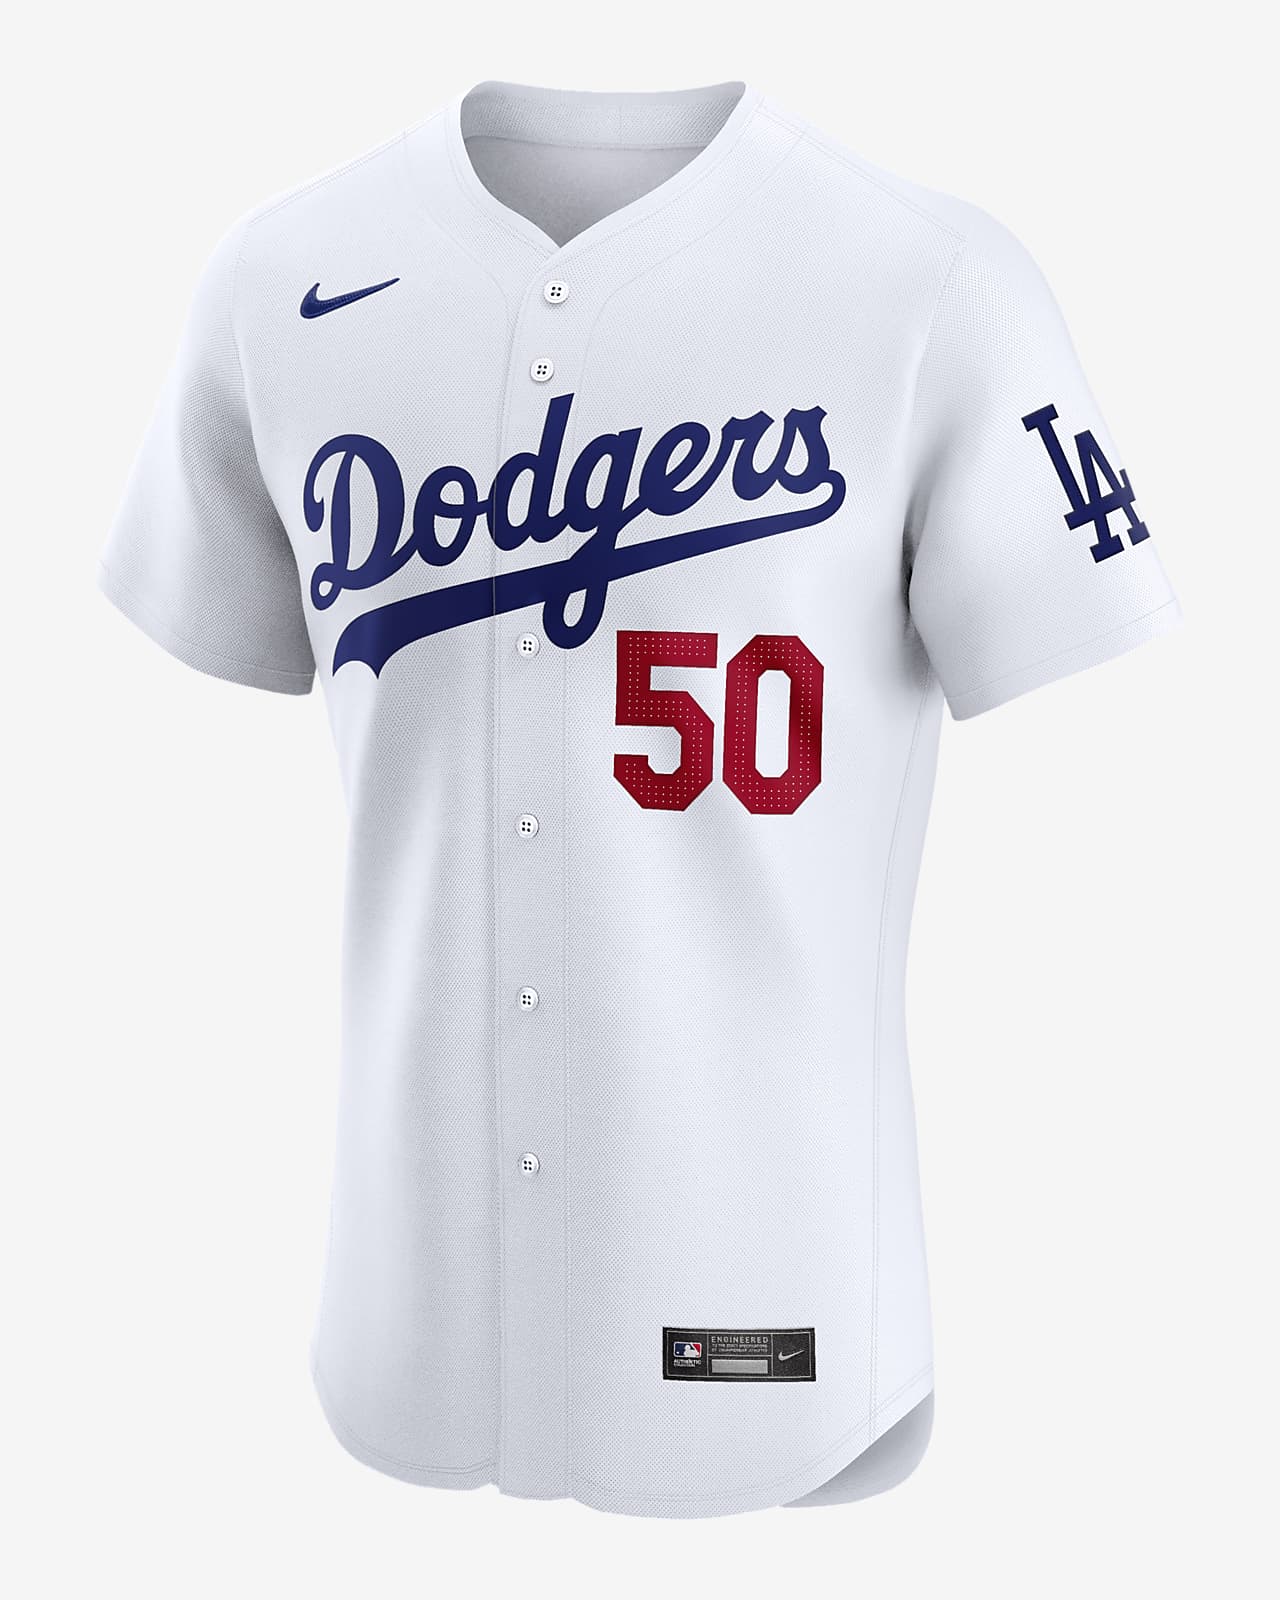 Jersey Nike Dri-FIT ADV de la MLB Elite para hombre Mookie Betts Los Angeles Dodgers